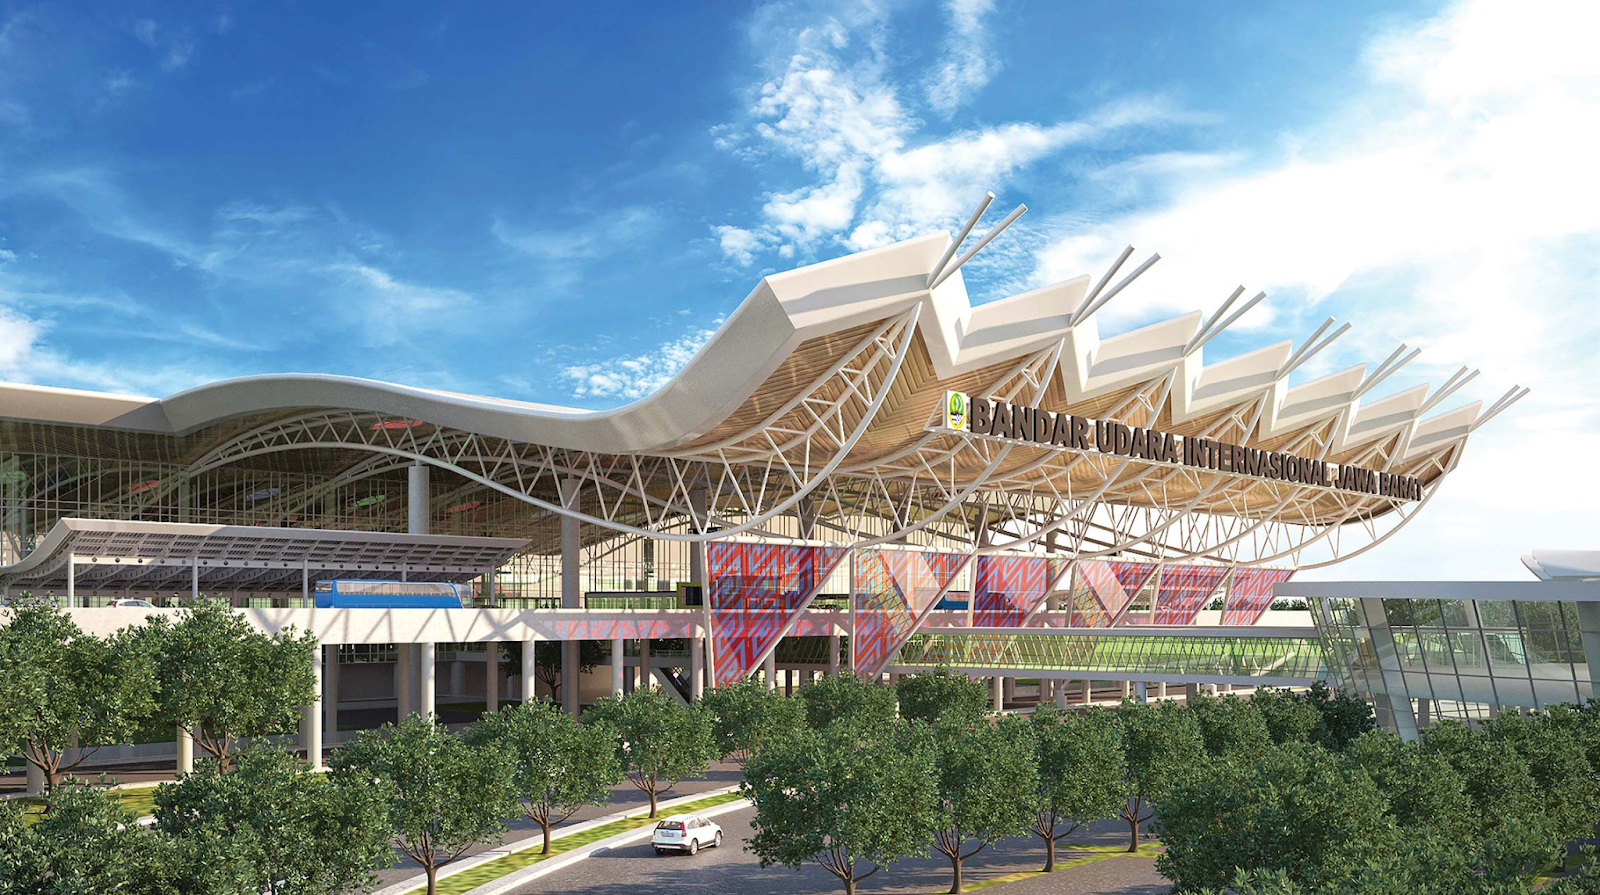 Bandara Internasional Jawa Barat (BIJB) Kertajati, bandara terluas kedua di Indonesia (Photo: Construction Plus Asia)